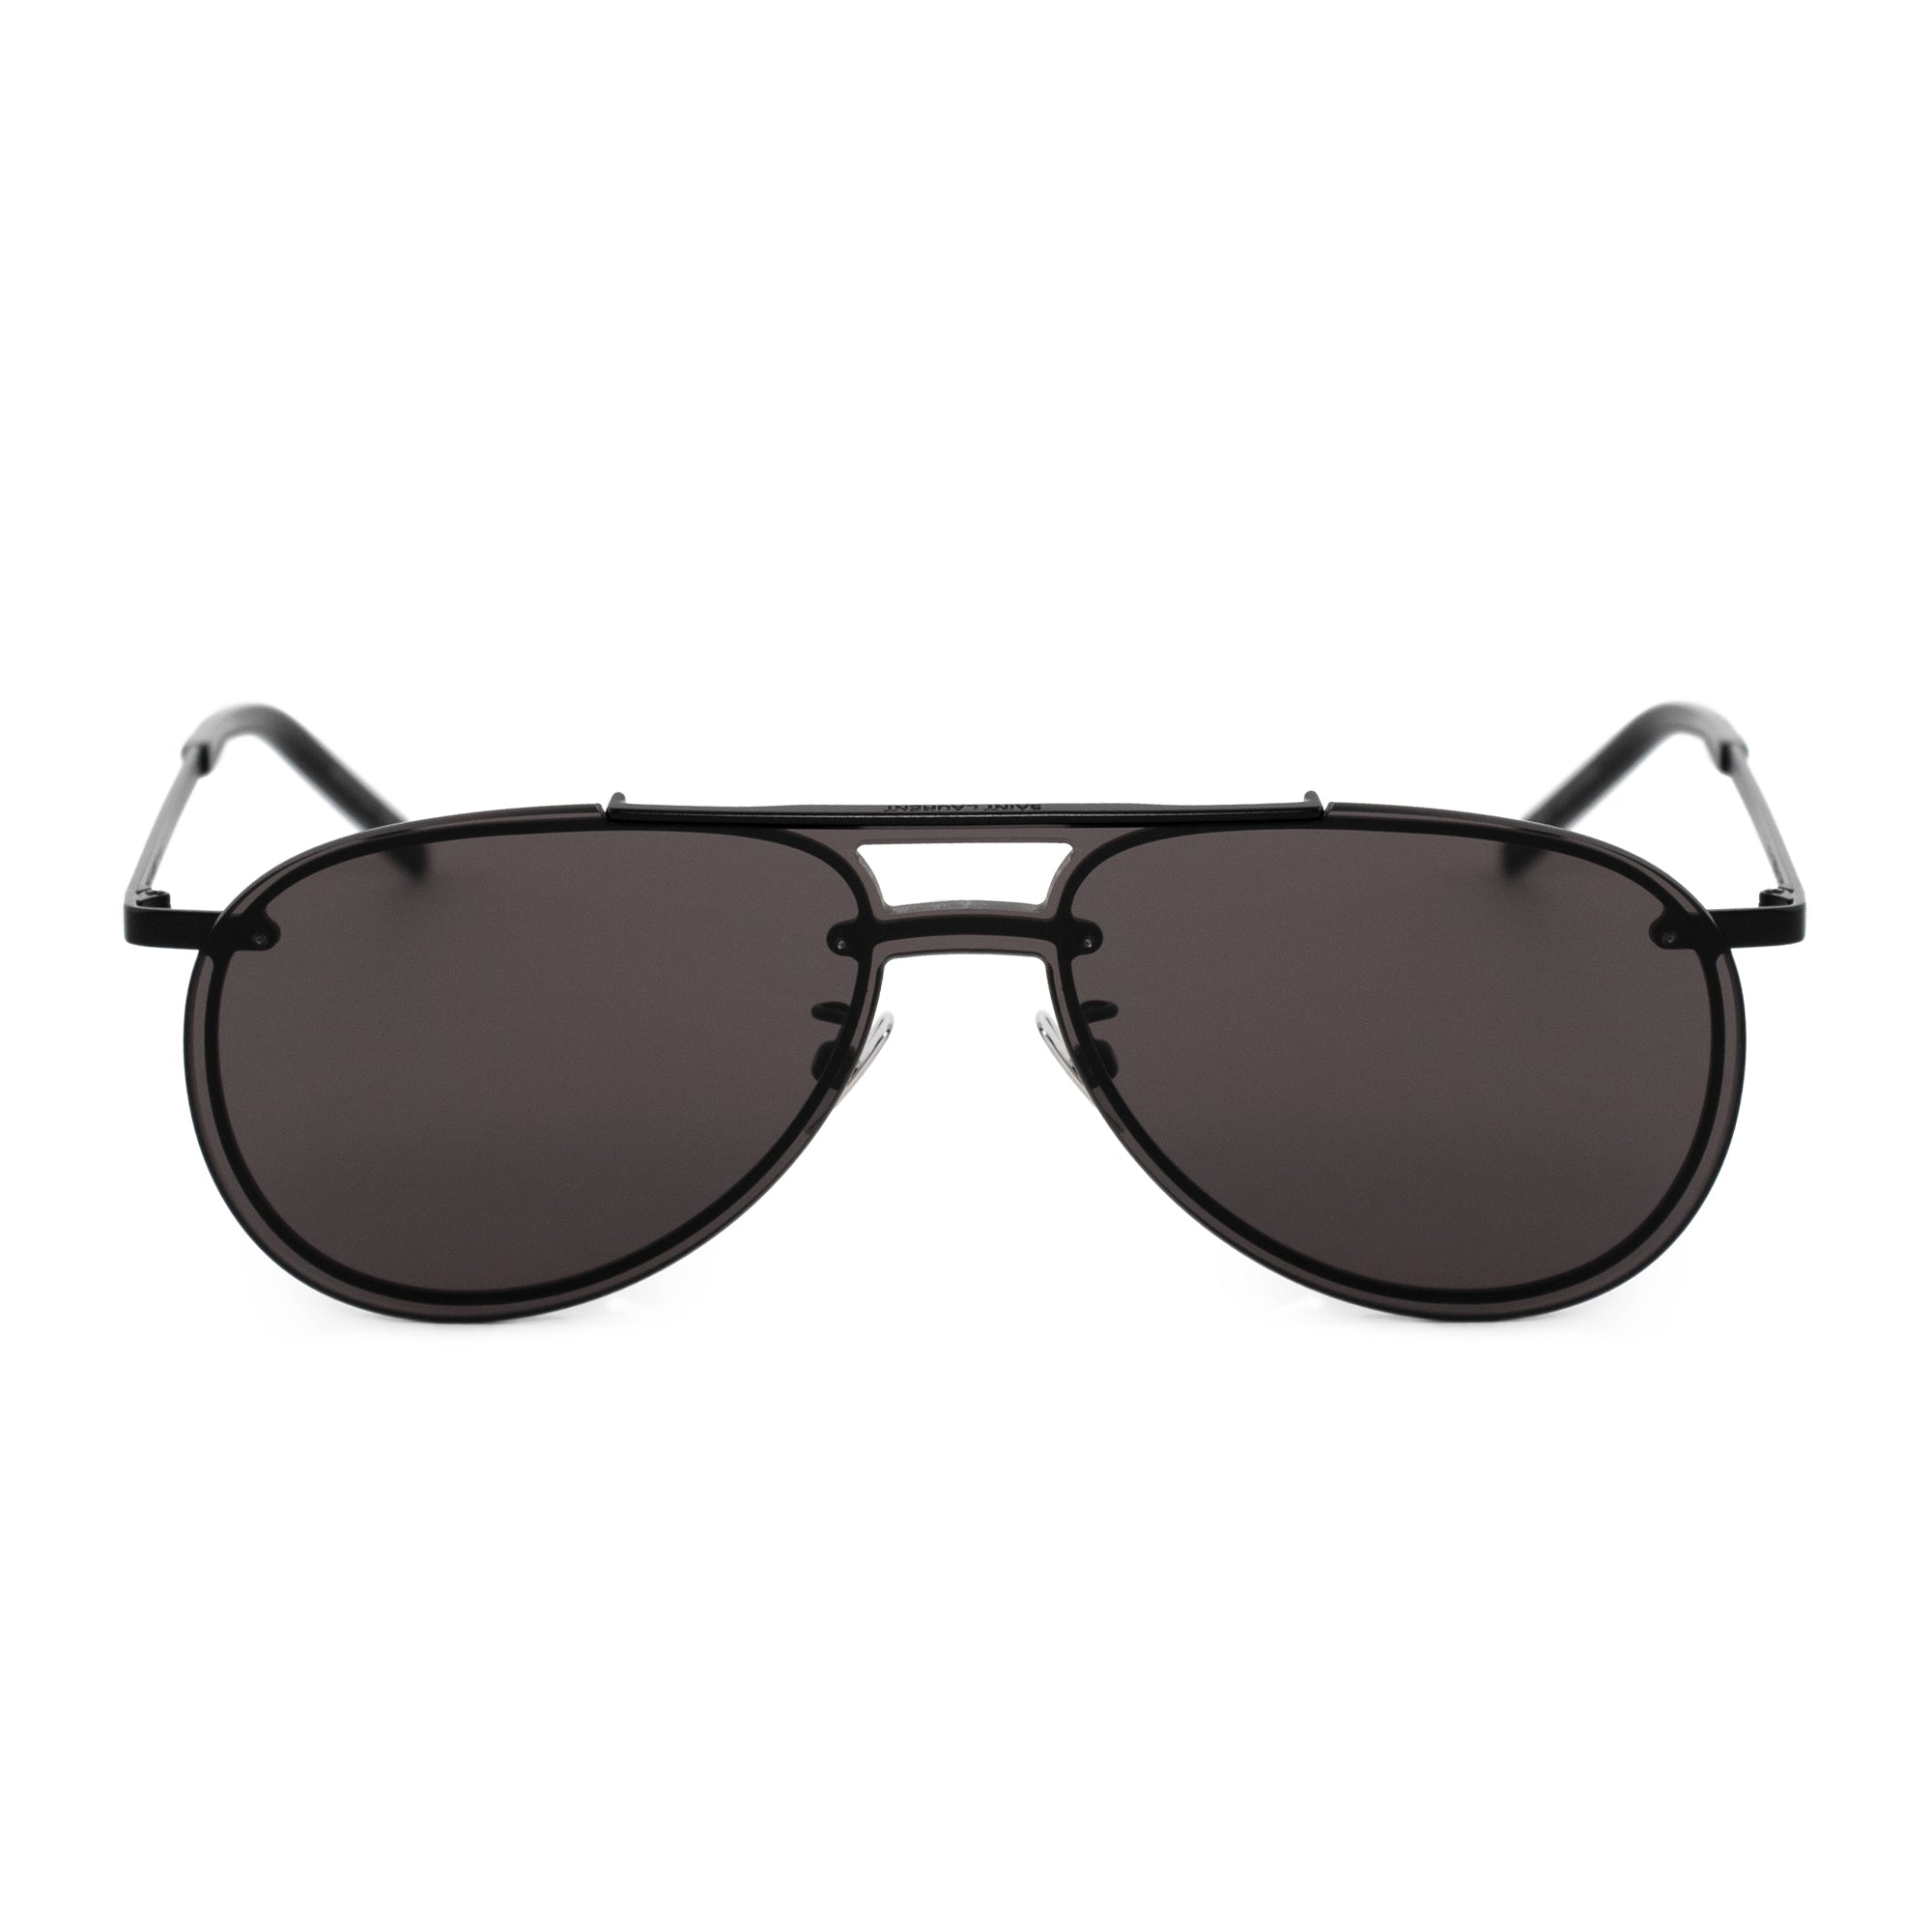 Saint Laurent Aviator Sunglasses SL416 002 99